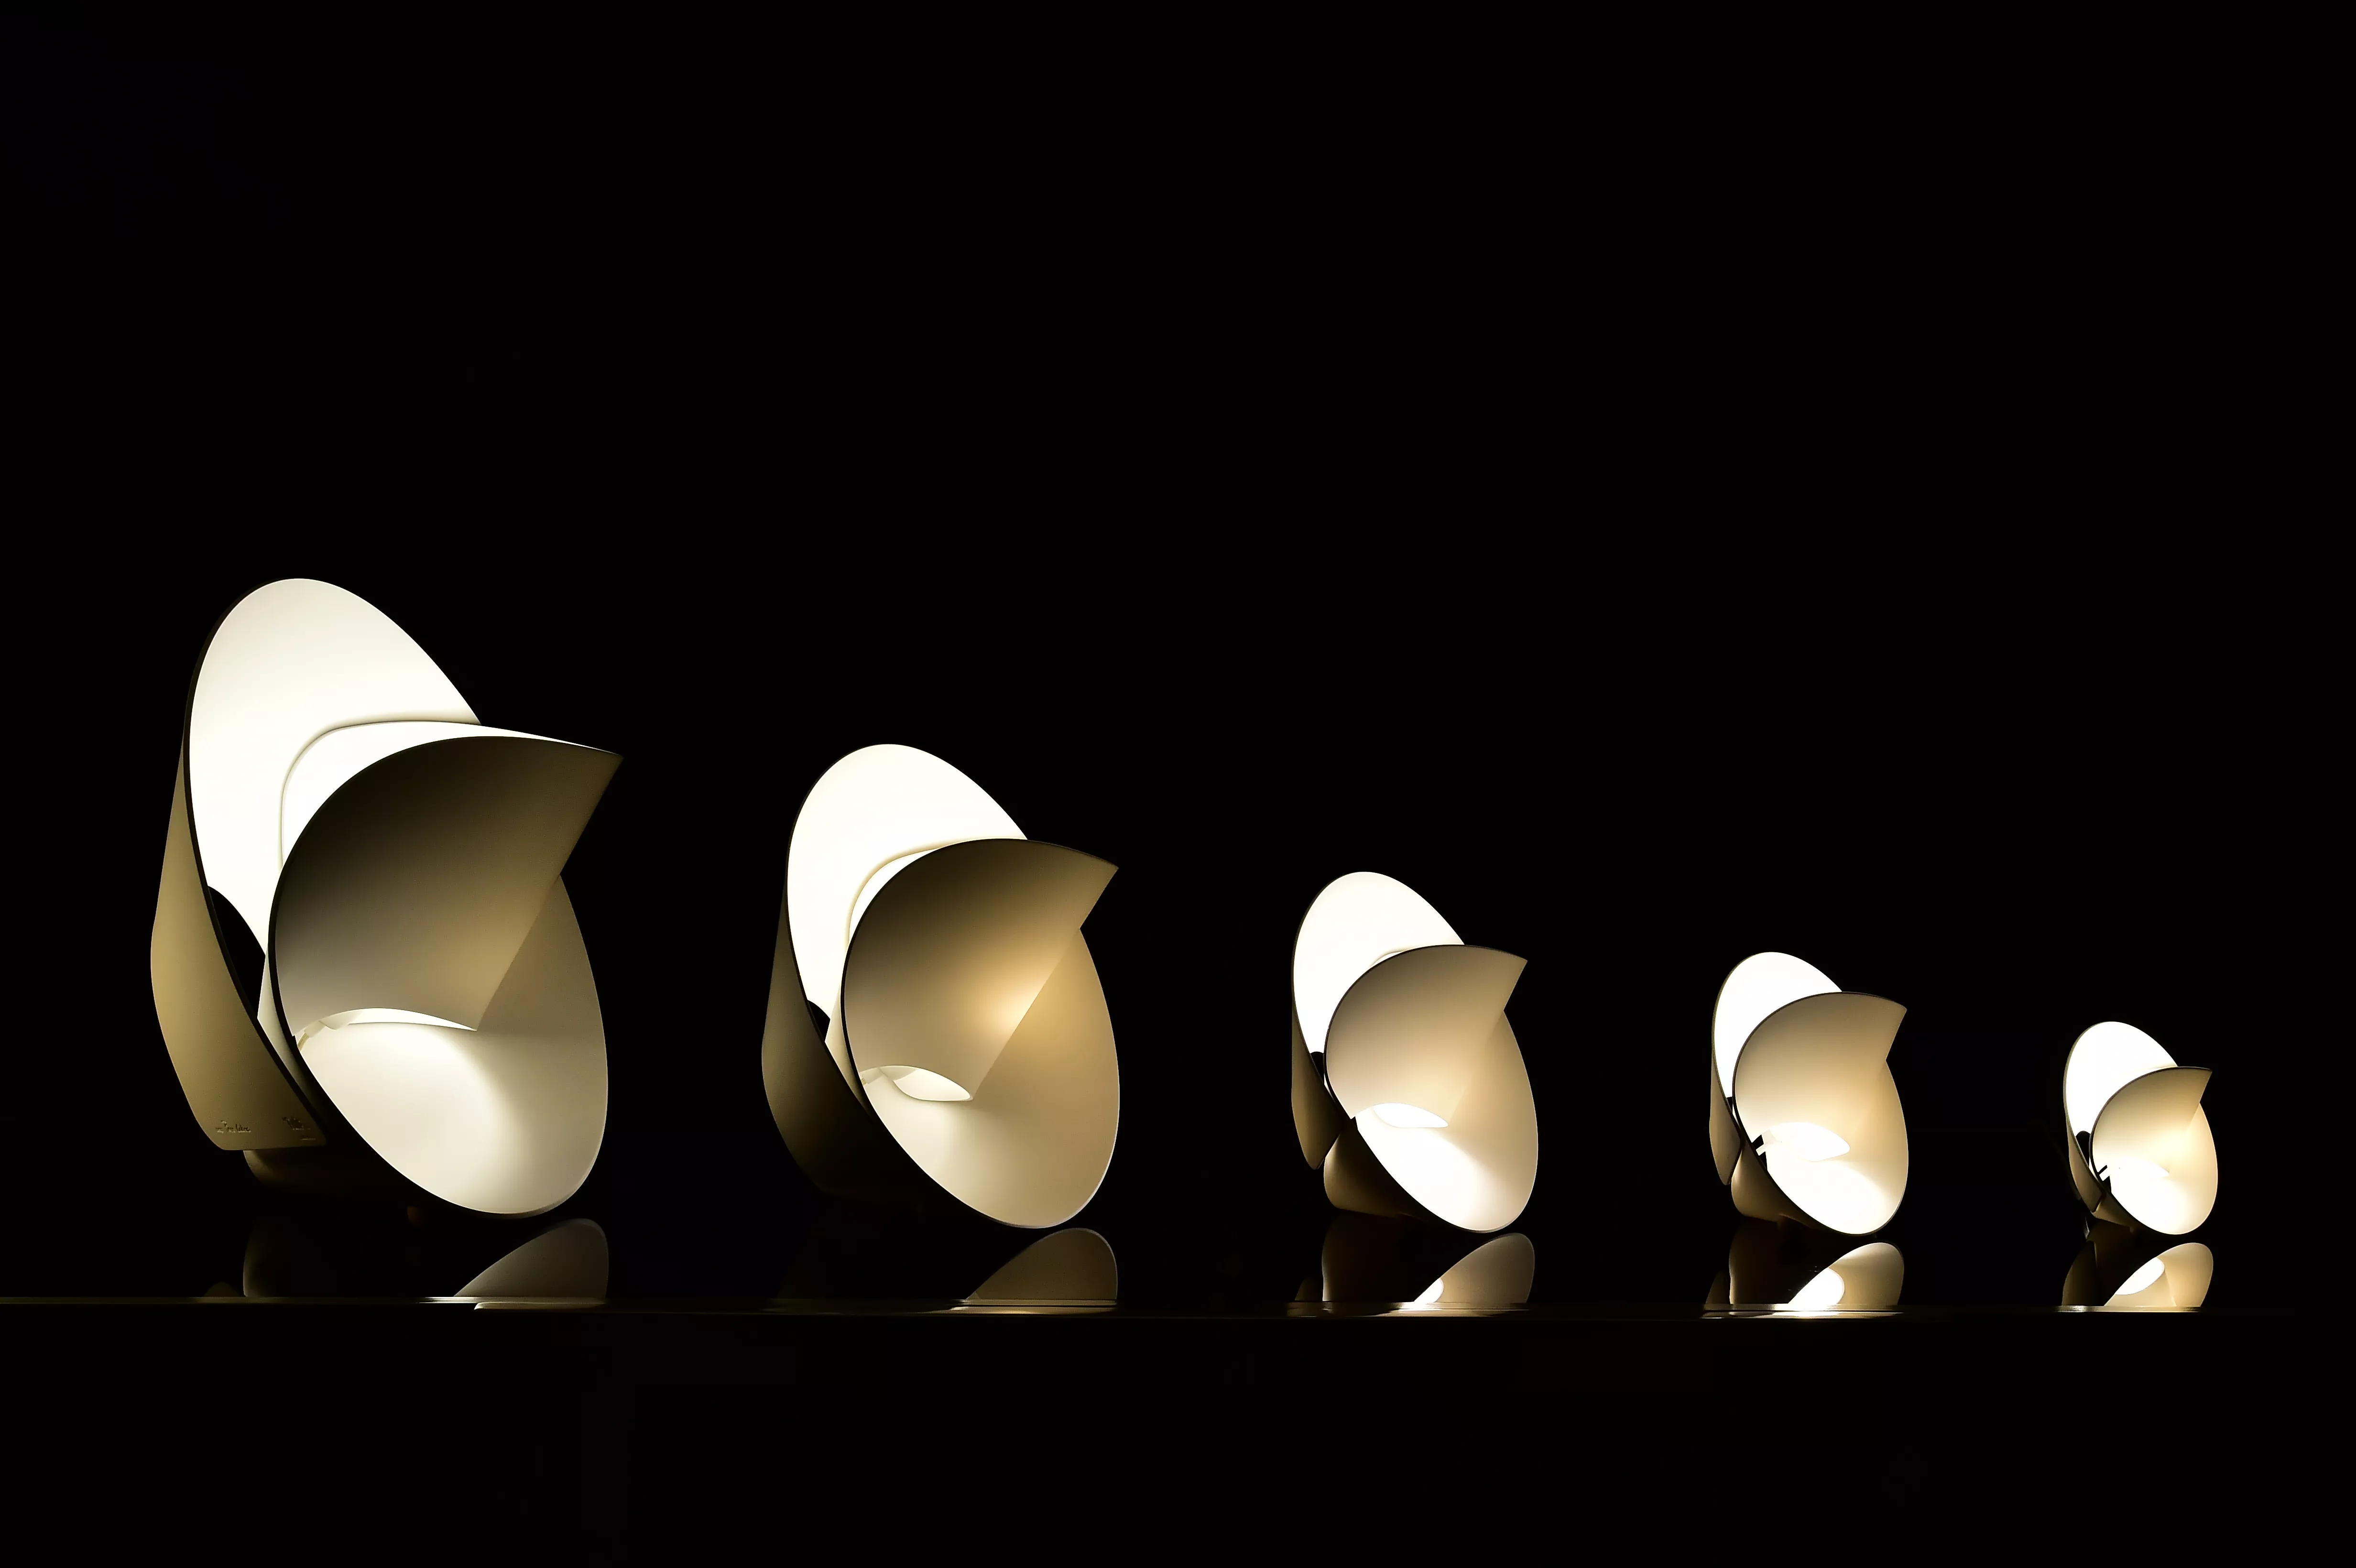 HIMACS presents the “Tulip” lamp by Pierre Cabrera